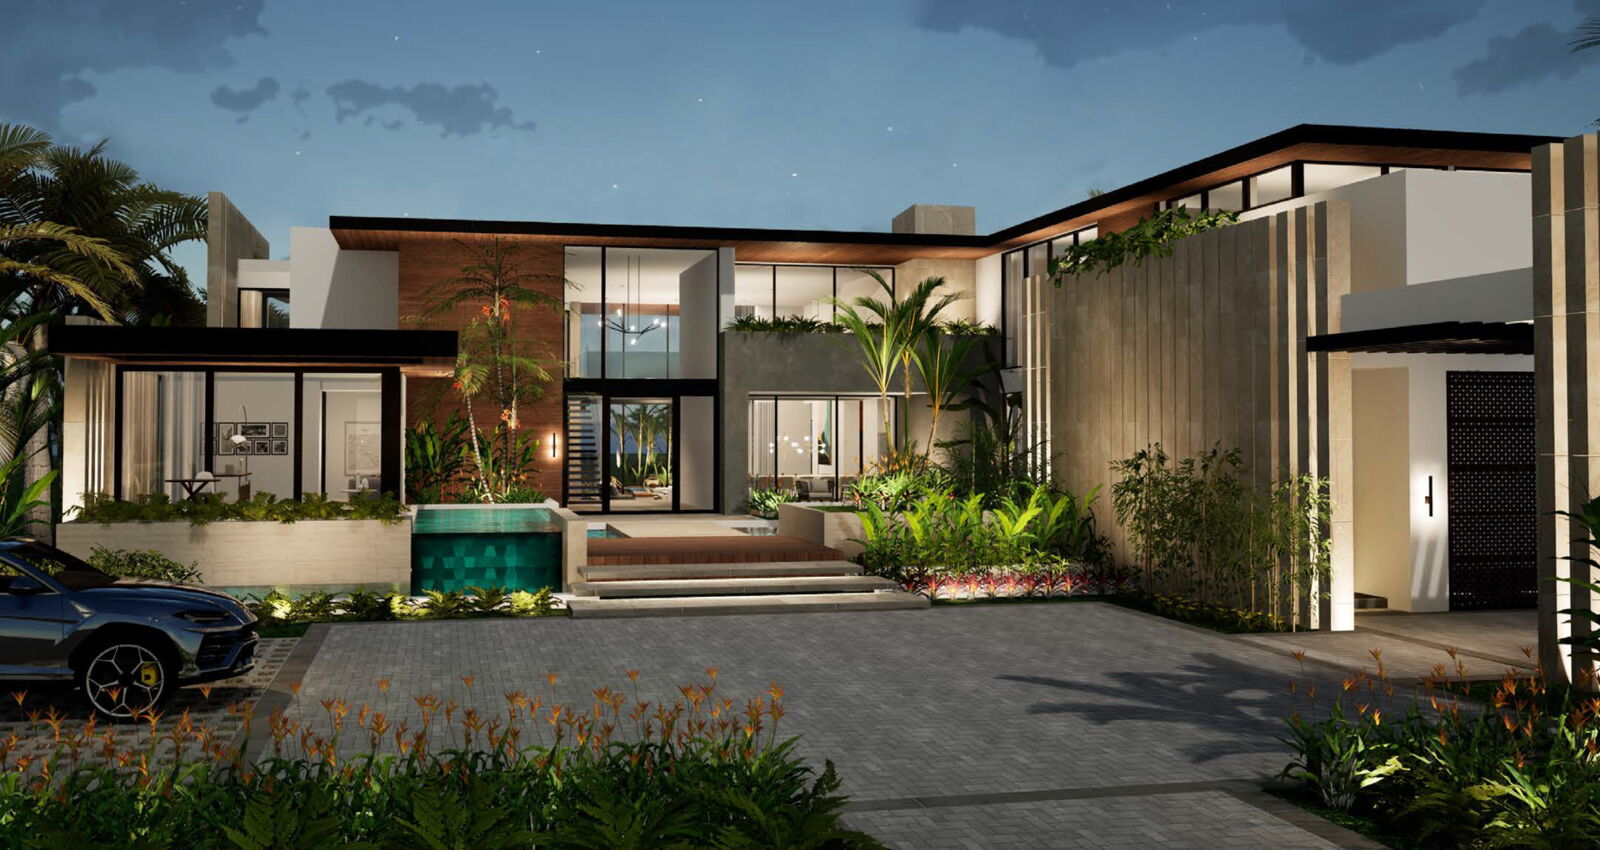 la cala horizon modern model home for sale at dorado beach resort puerto rico